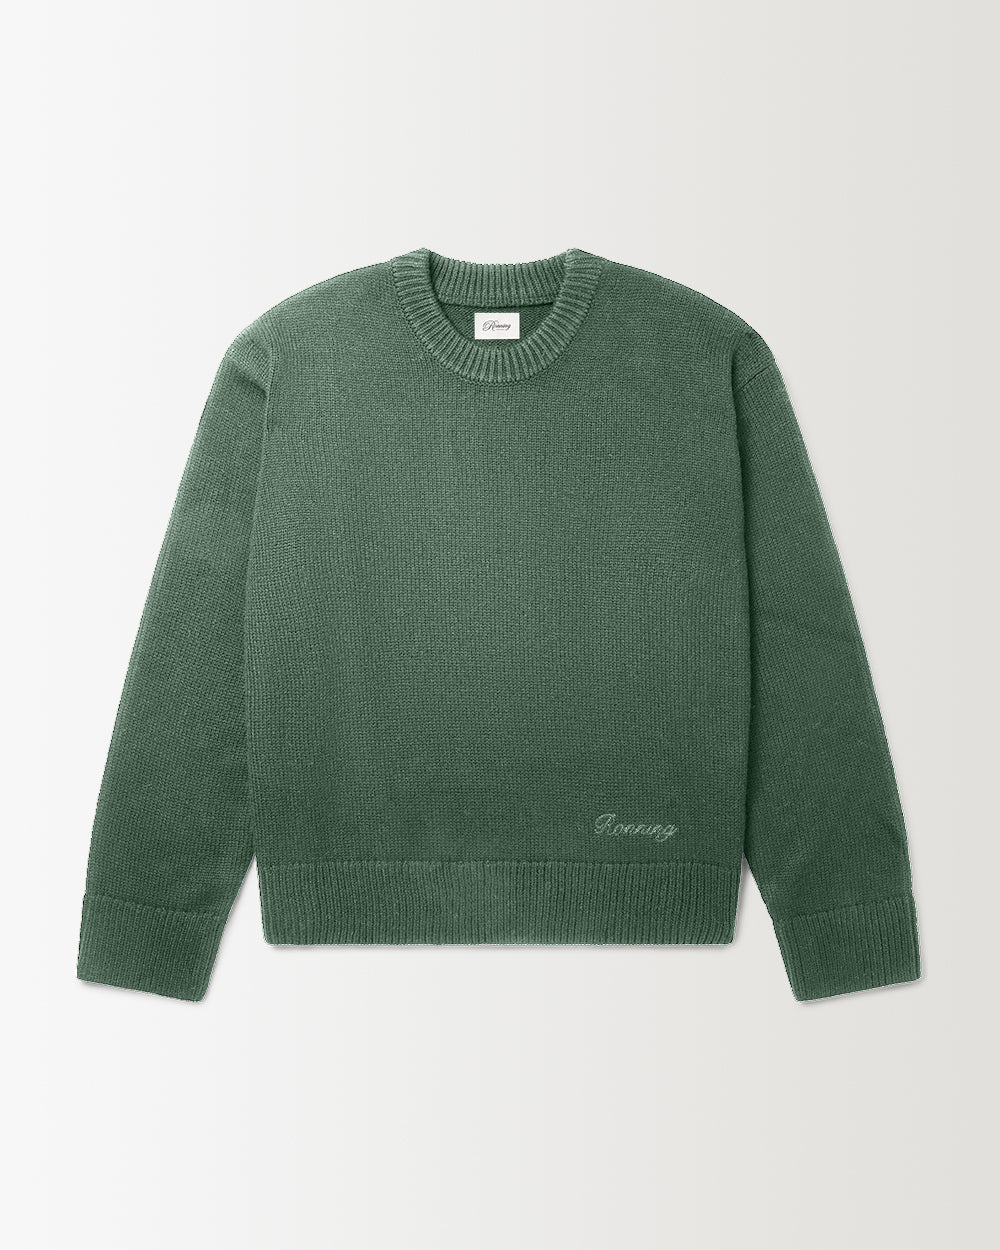 R Knit Sweater - Sage Green